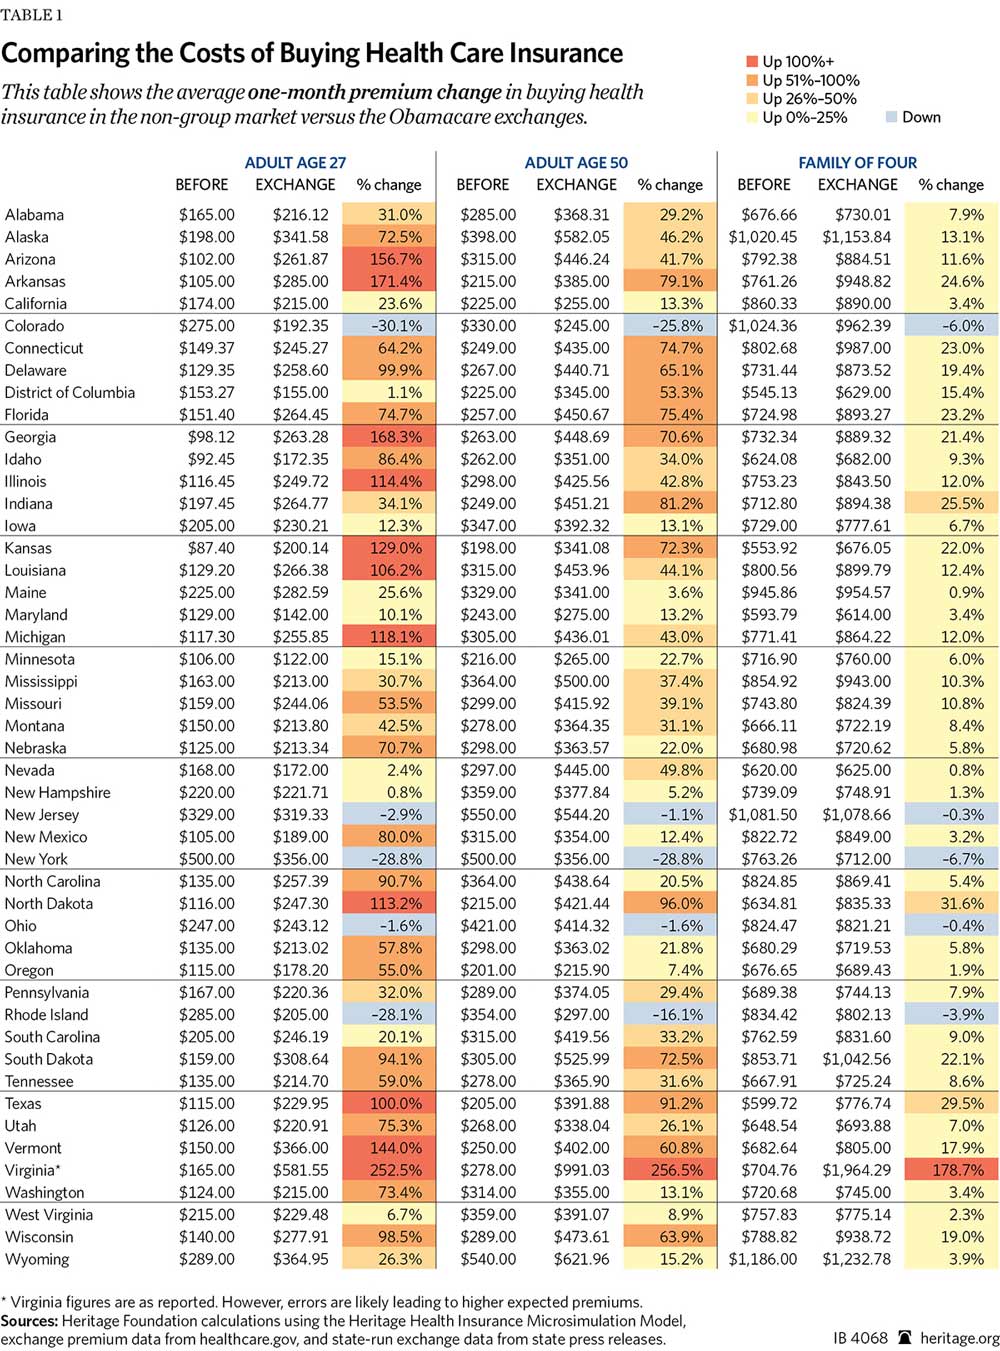 Health Insurance Chart Comparison